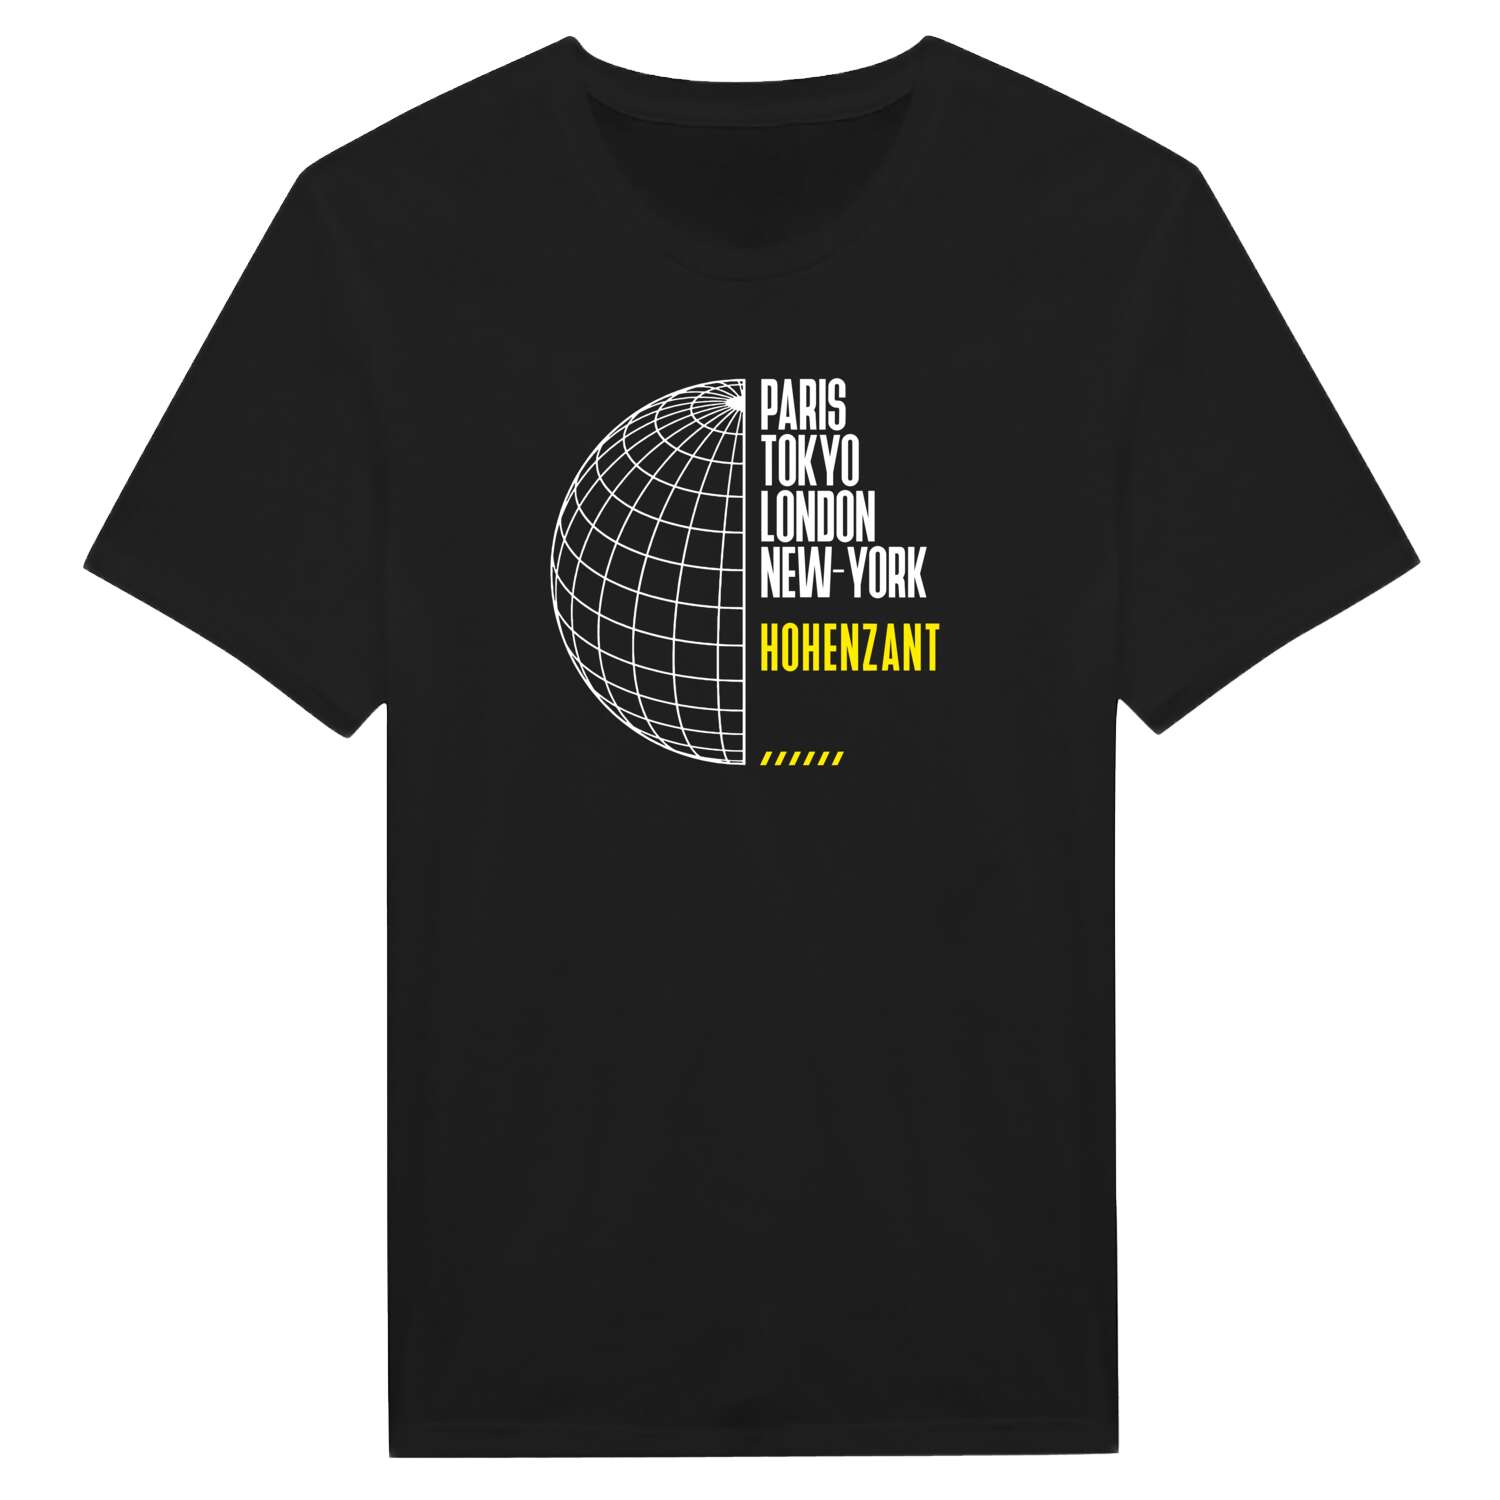 Hohenzant T-Shirt »Paris Tokyo London«